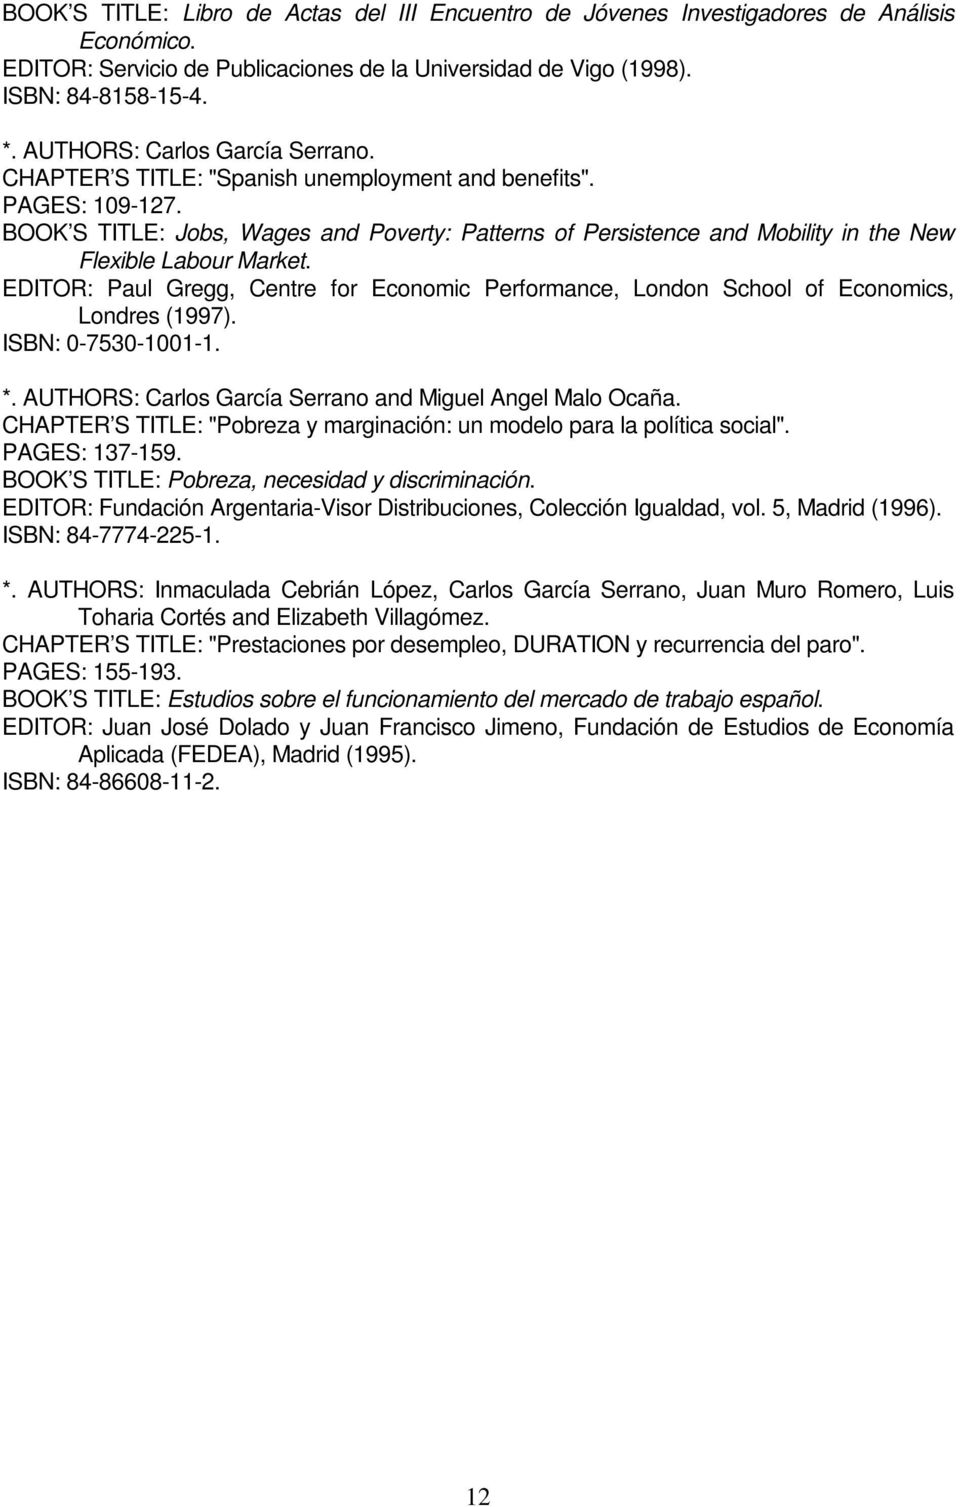 EDITOR: Paul Gregg, Centre for Economic Performance, London School of Economics, Londres (1997). ISBN: 0-7530-1001-1. *. AUTHORS: Carlos García Serrano and Miguel Angel Malo Ocaña.